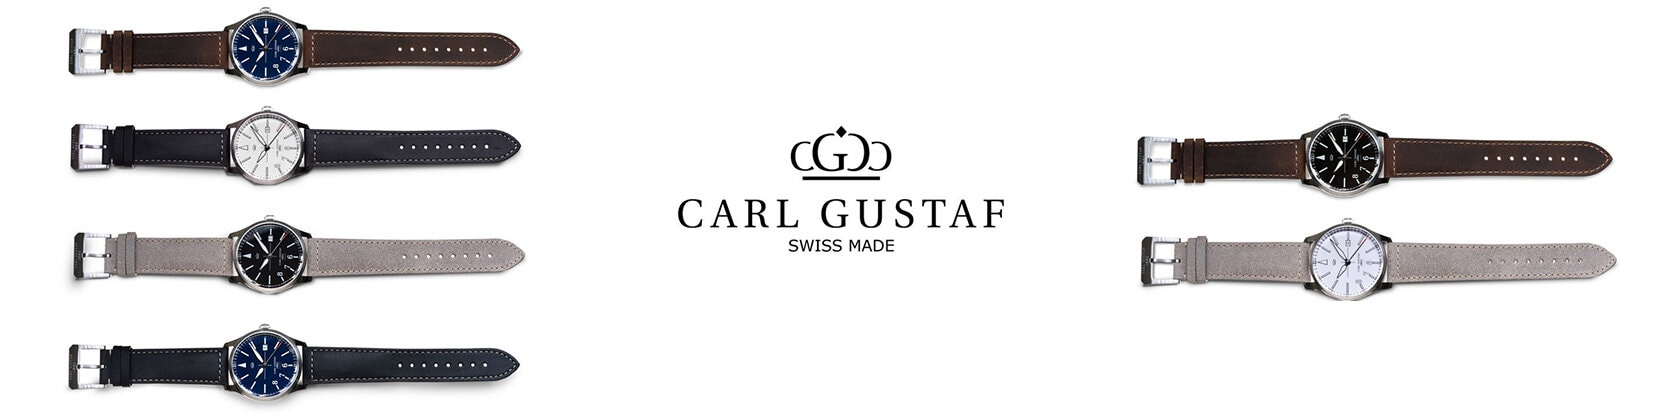 Carl Gustaf klockor